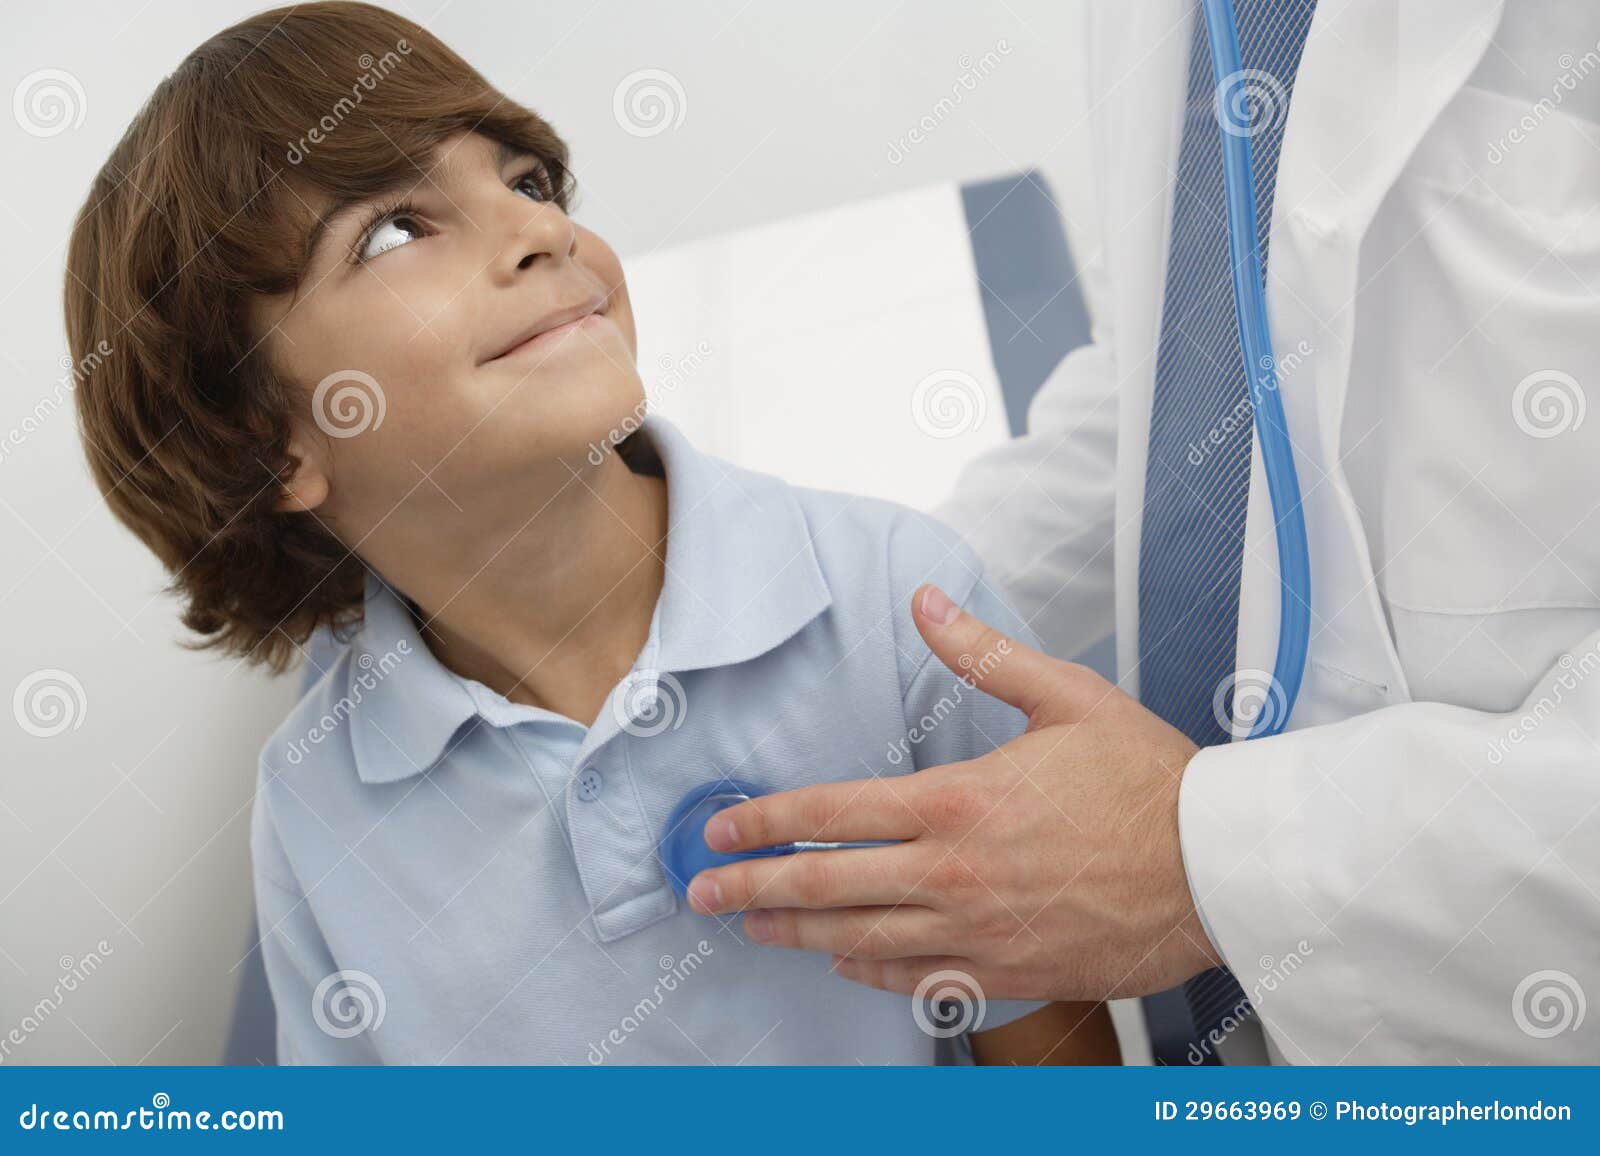 Exam doctor. Врач осматривает мальчика. Подросток у мужского врача. Doctor examining boy. Doctor examining a teenage boy with a stethoscope stock phot.